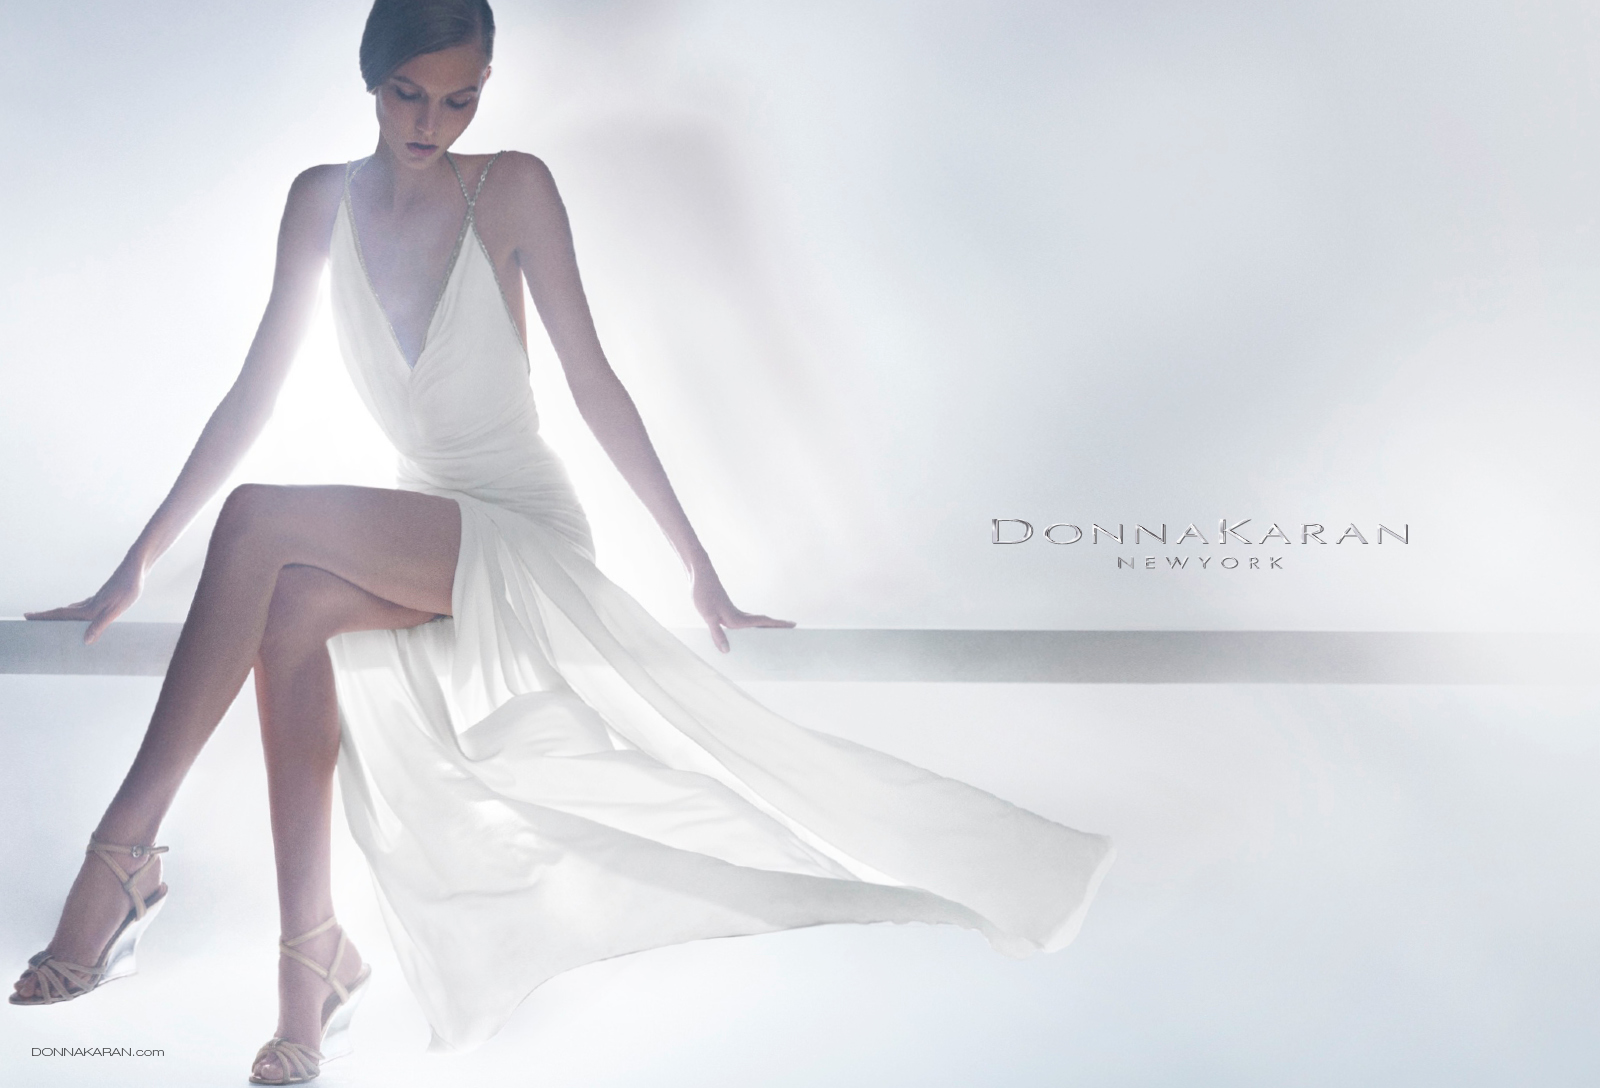 Donna Karan shares wisdom on fashion and living – The Denver Post